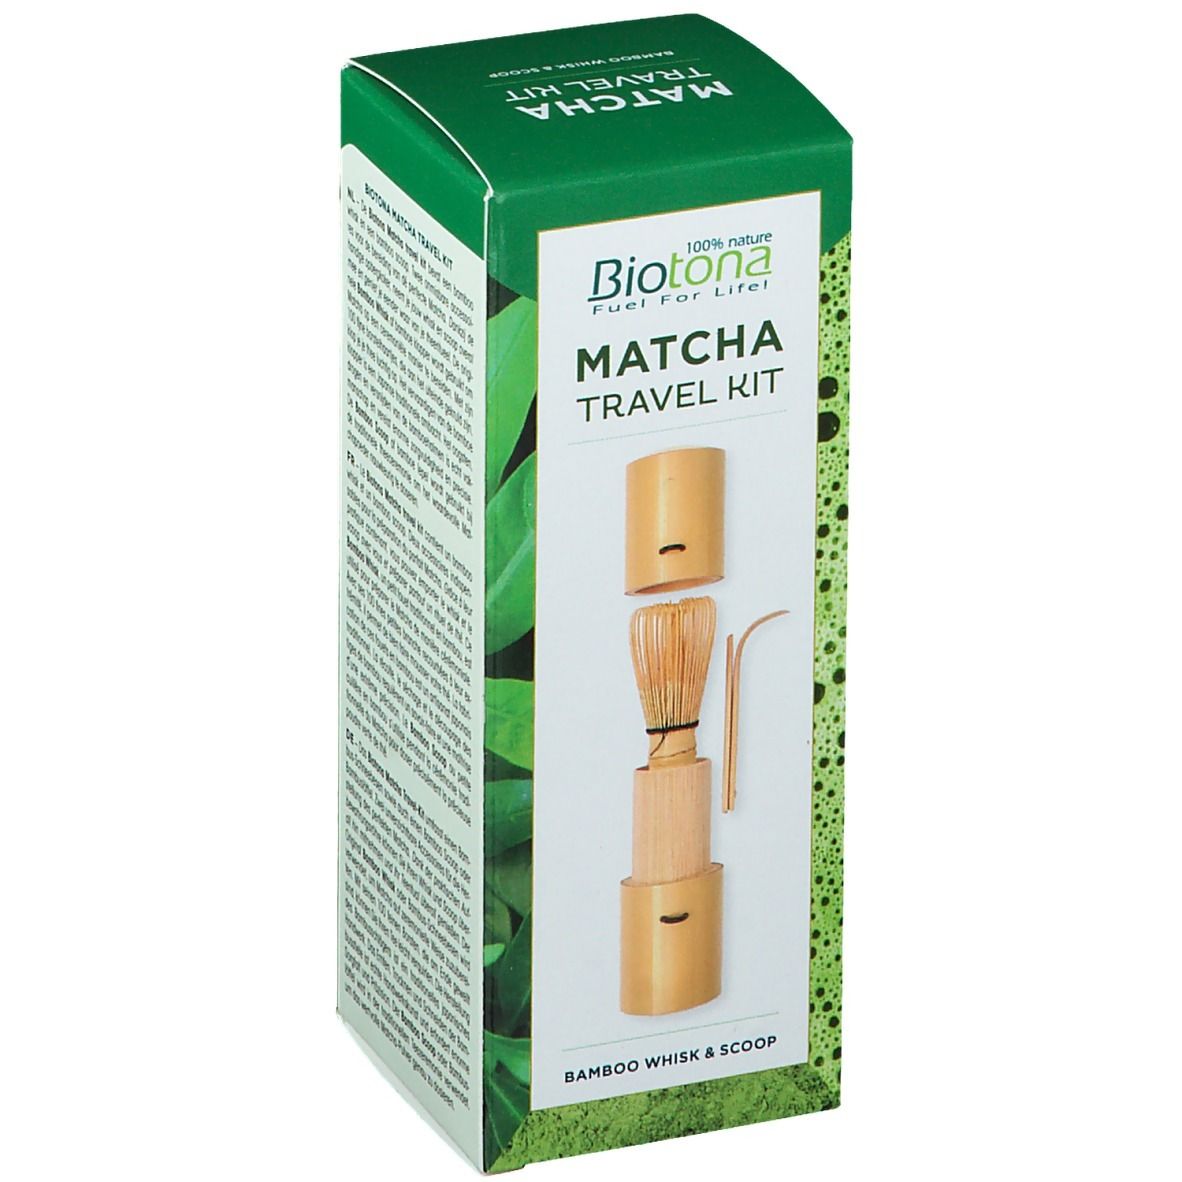 Biotona Matcha Travel Kit